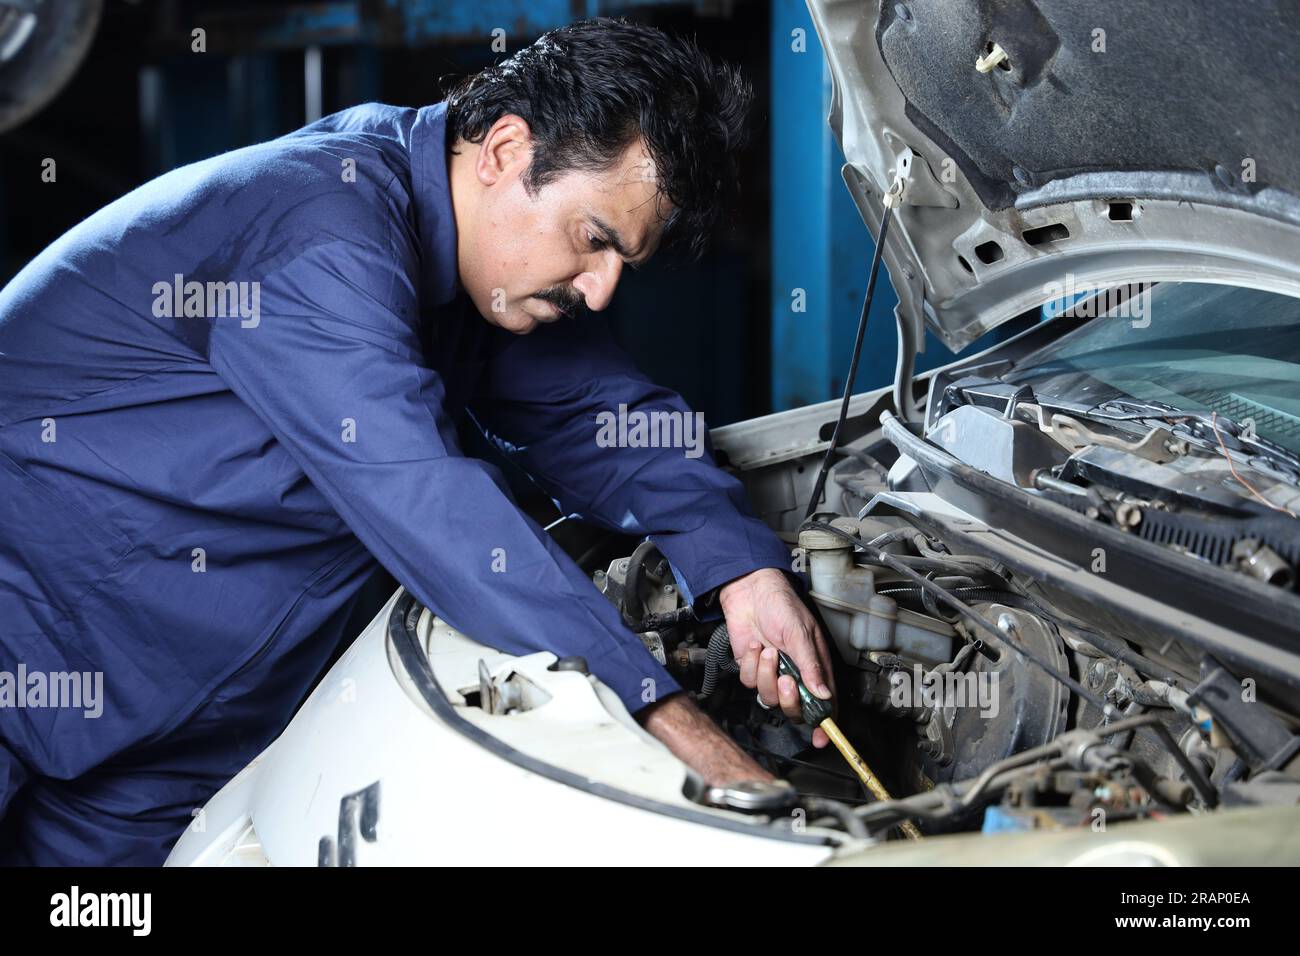 Auto Mechanic Tools High Quality Photo Stock Photo 2313749517